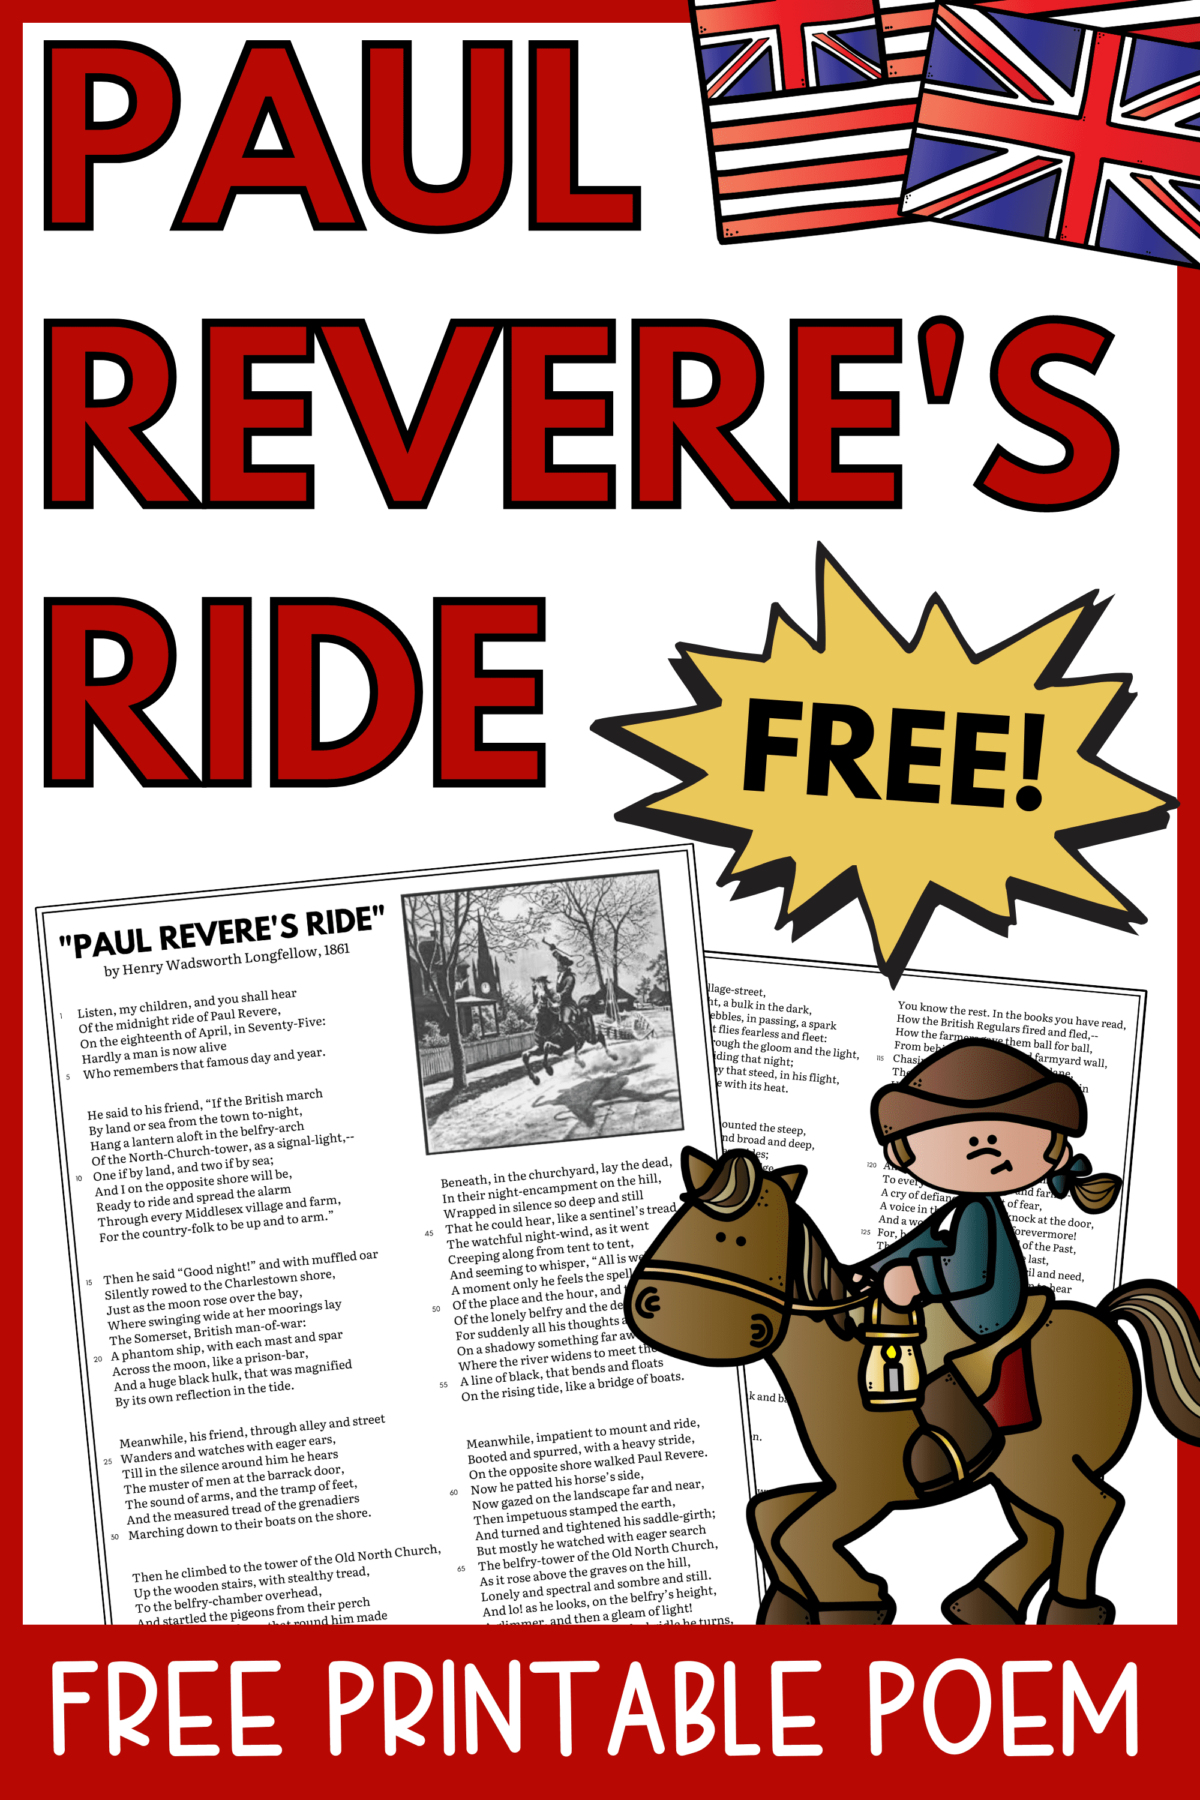 Paul Revere's Ride Free Printable Poem PDF